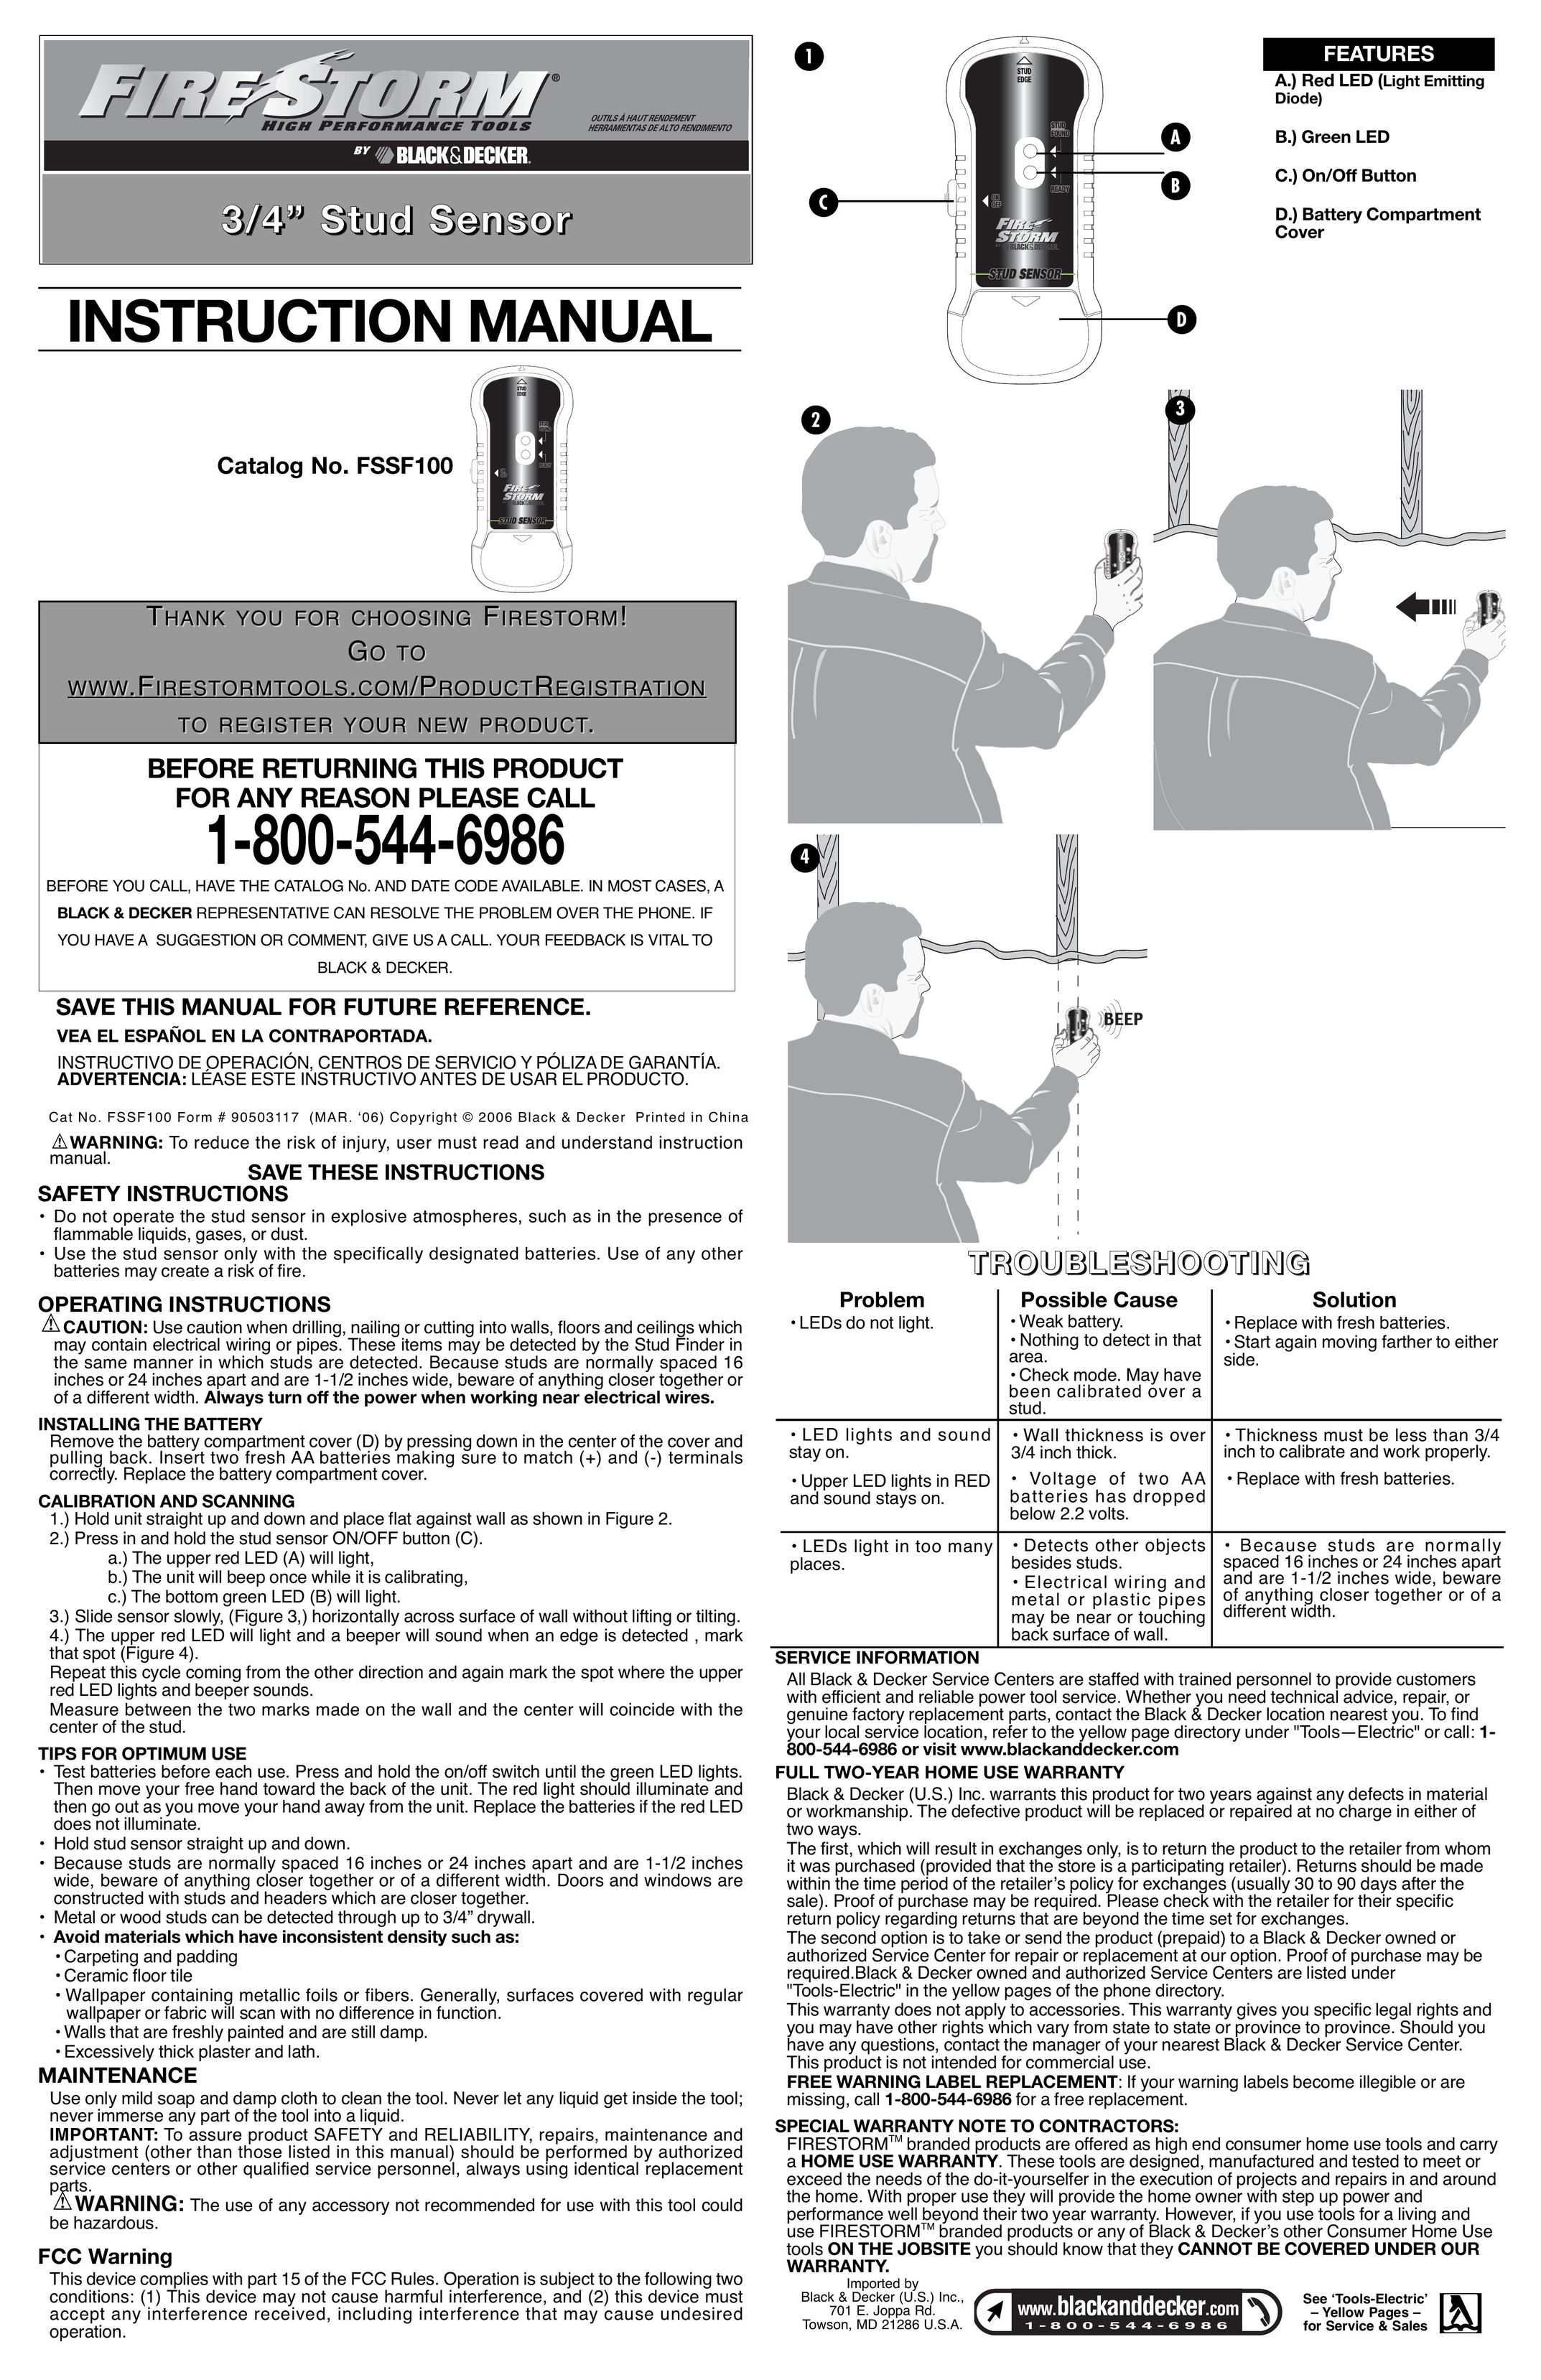 Black & Decker FSSF100 Stud Sensor User Manual